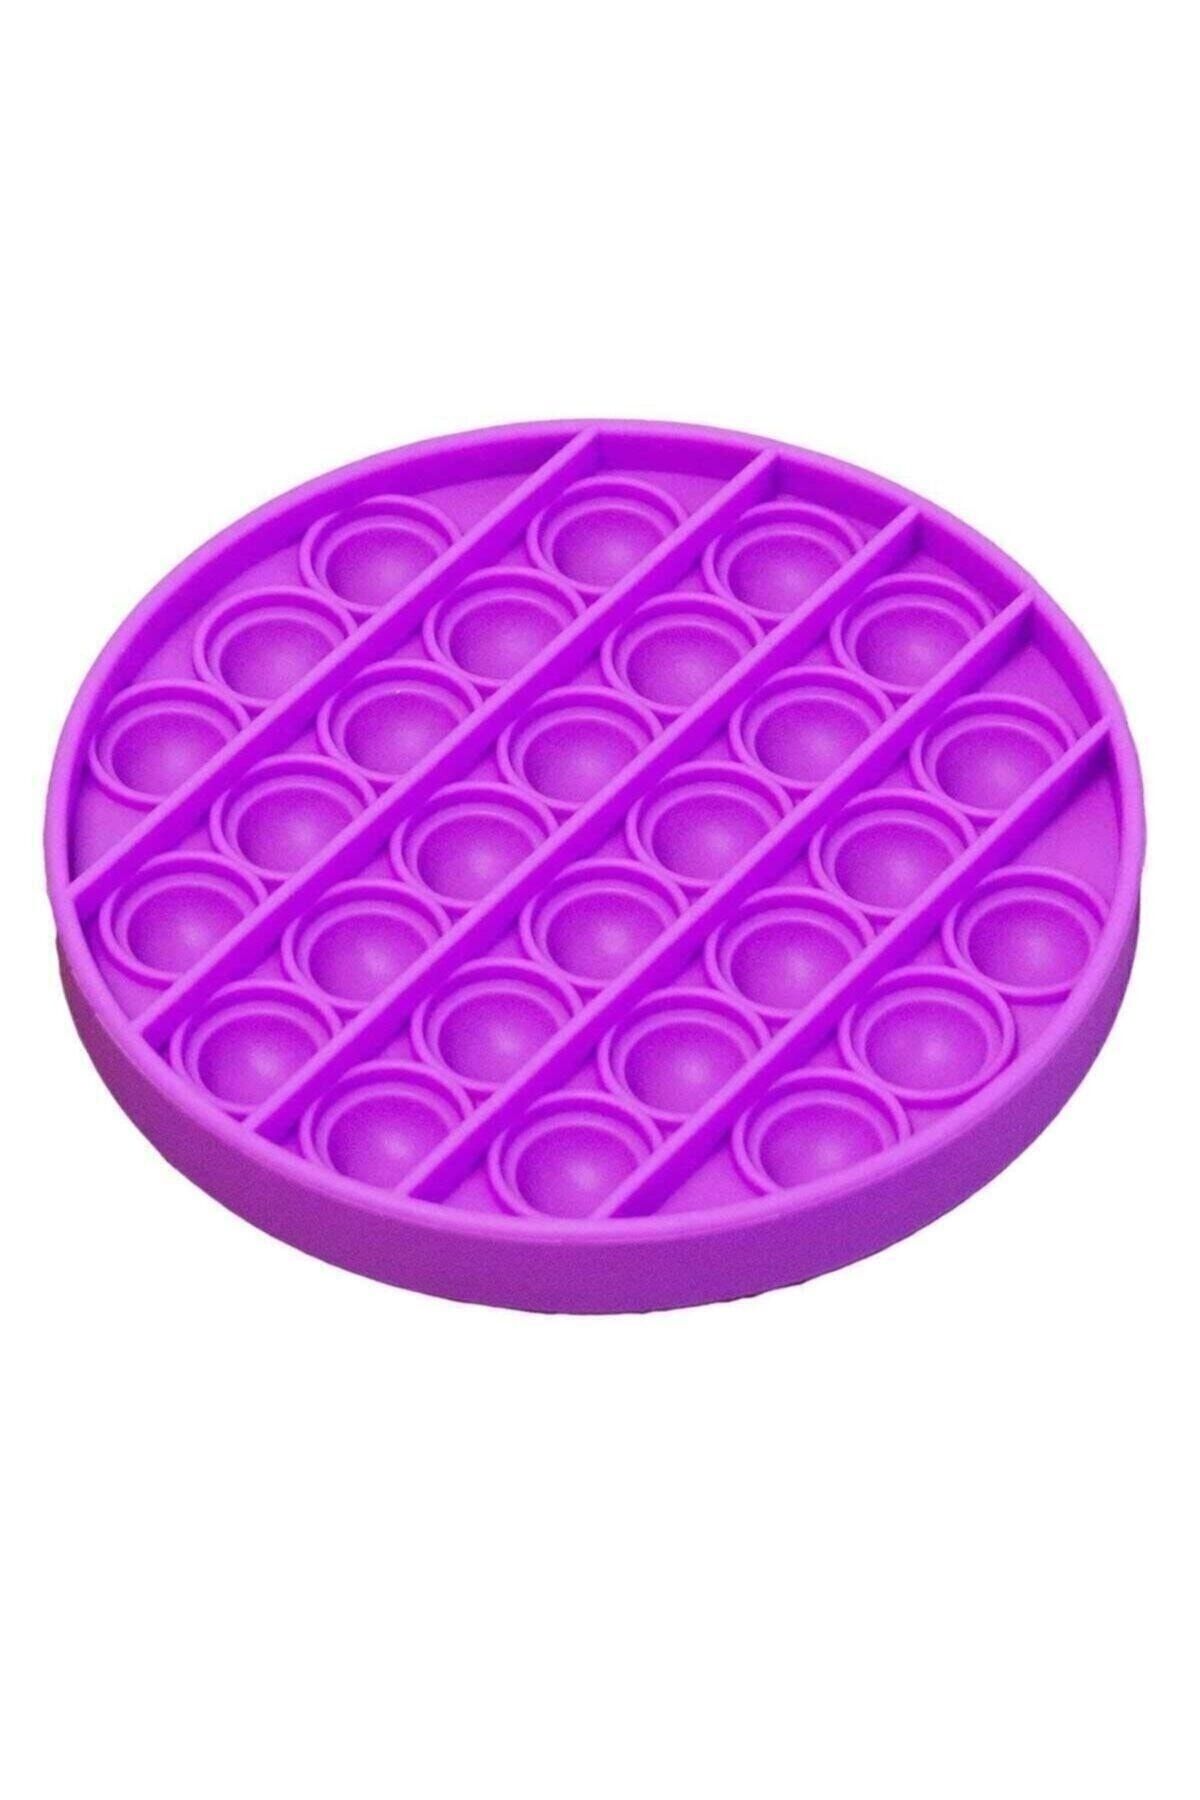 Genel Markalar Popit Pop It Duyusal Oyuncak Özel Pop Stres Yuvarlak Mor Purple Home Game Toys